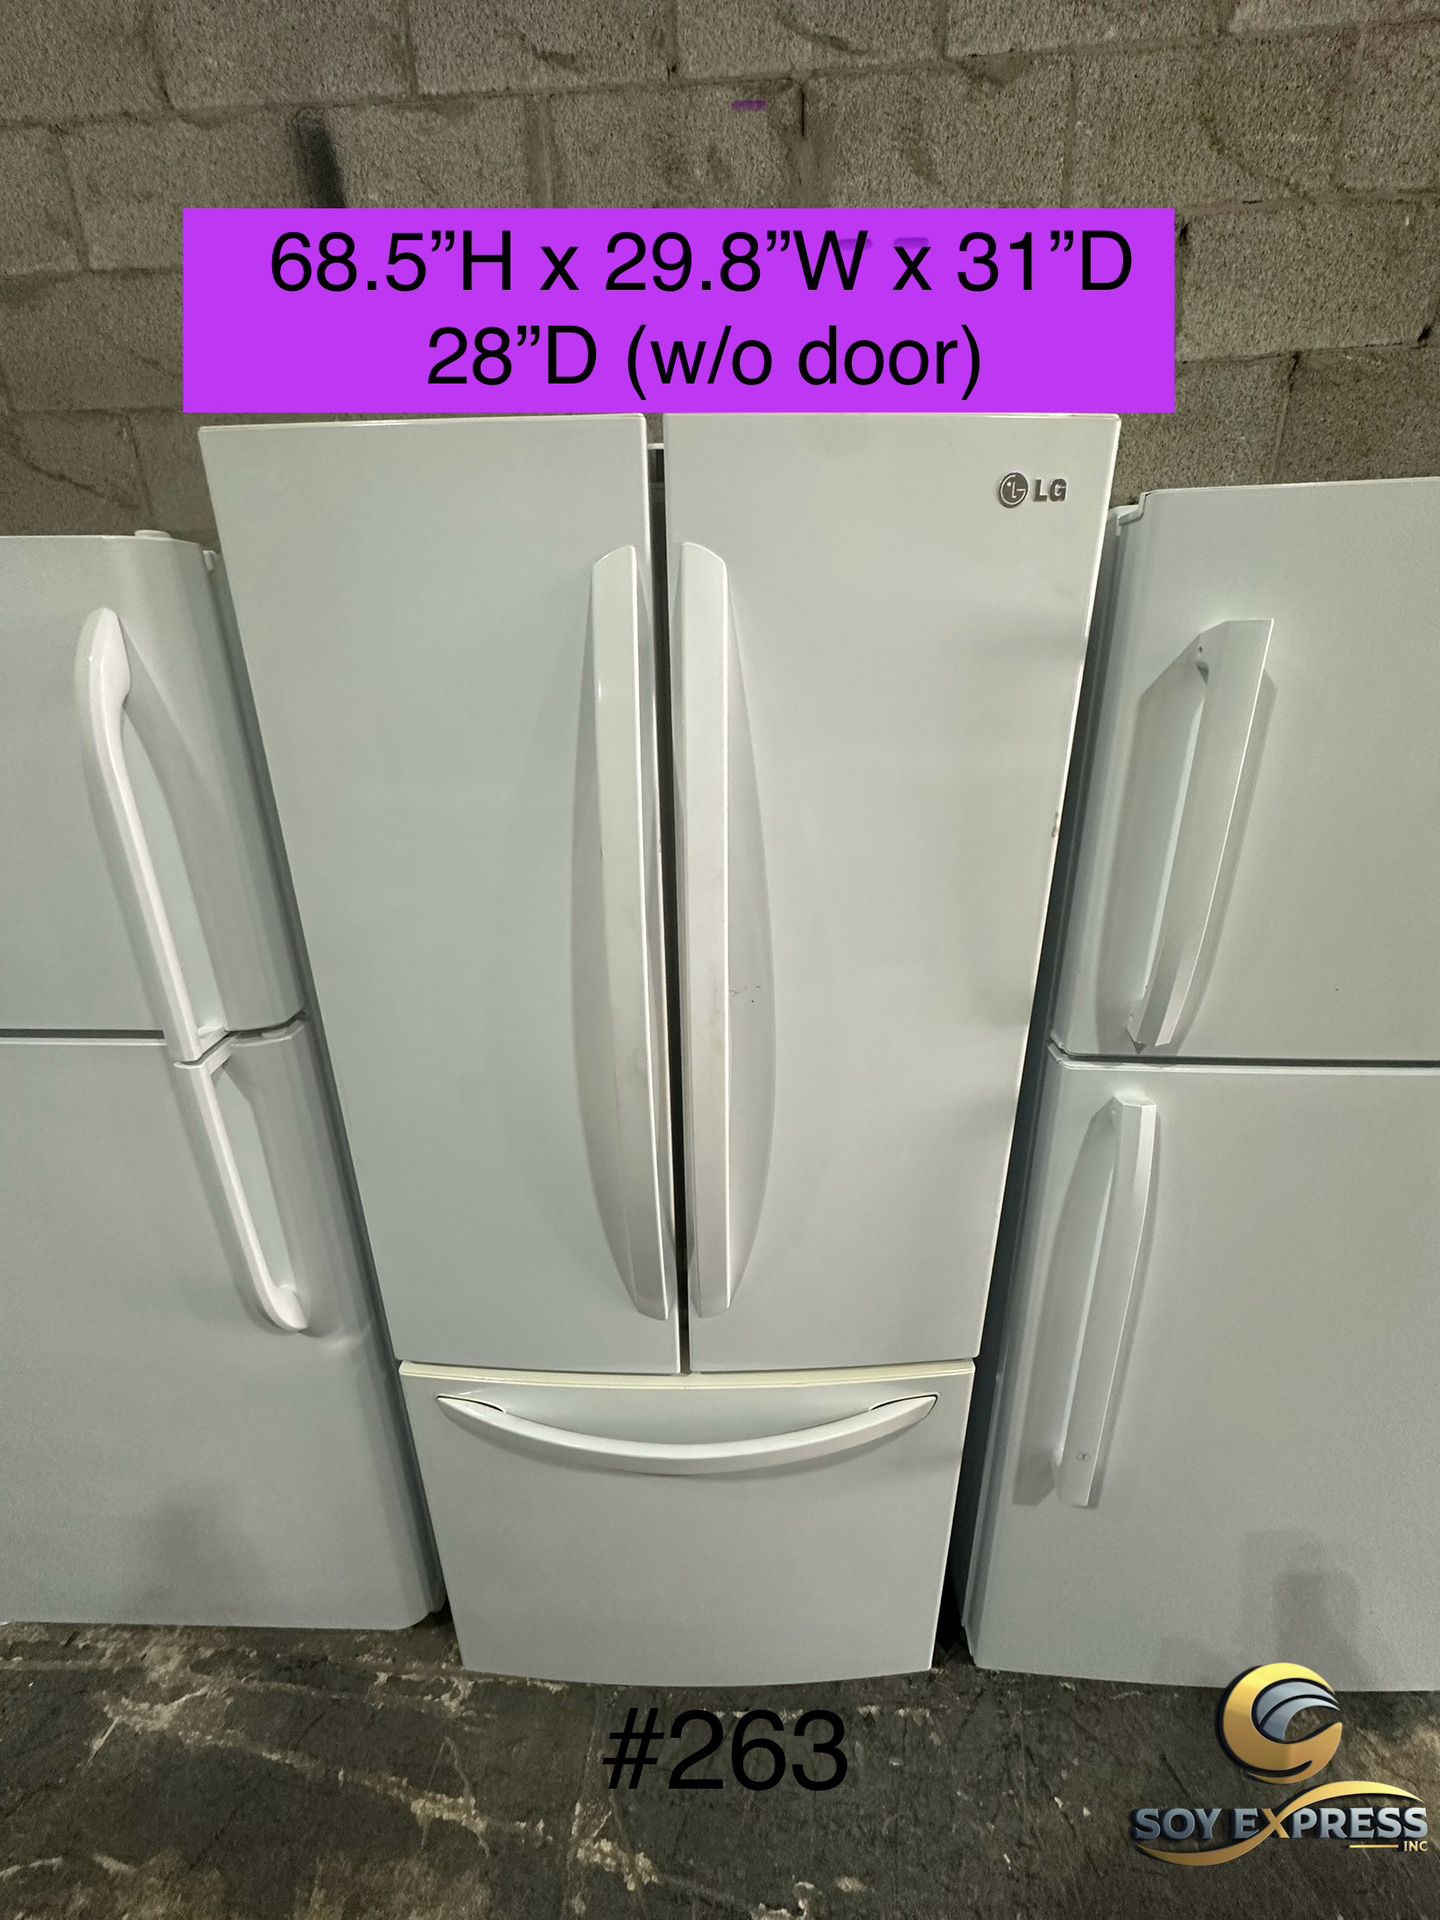 LG Refrigerator French Door (#263)